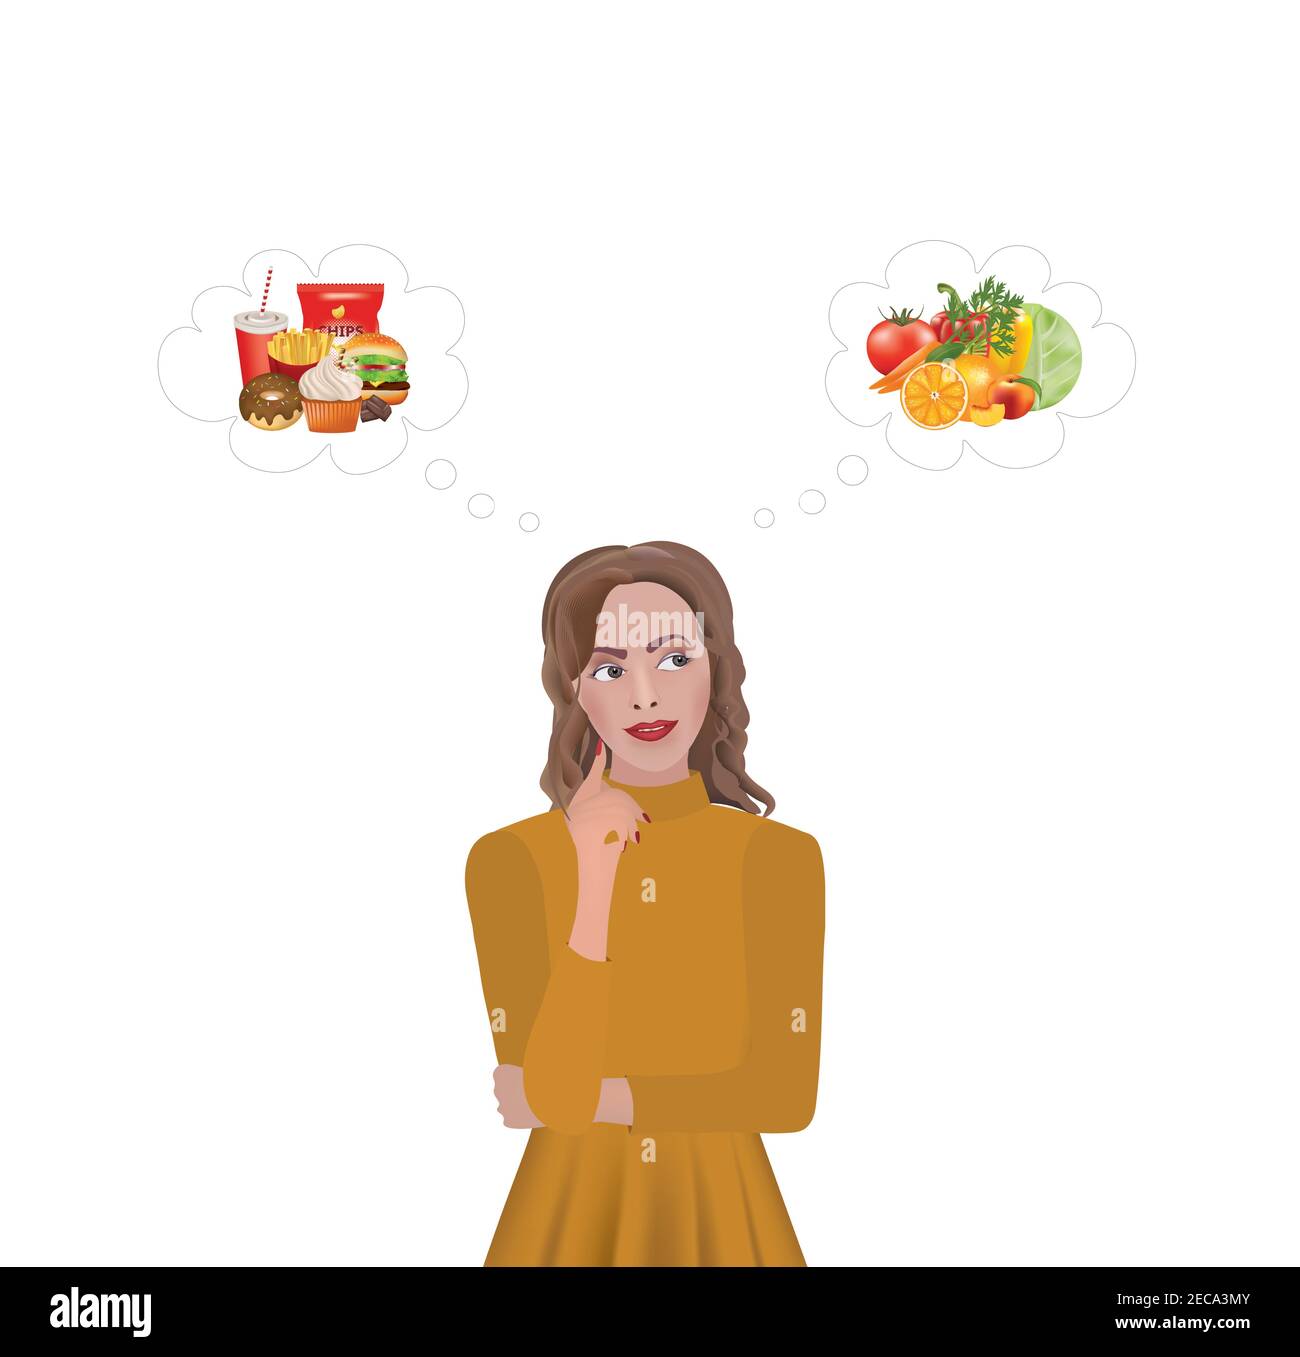 Frau über die Wahl der Lebensmittel denken, gesunde vs ungesundes Essen, Vektor Stock Vektor